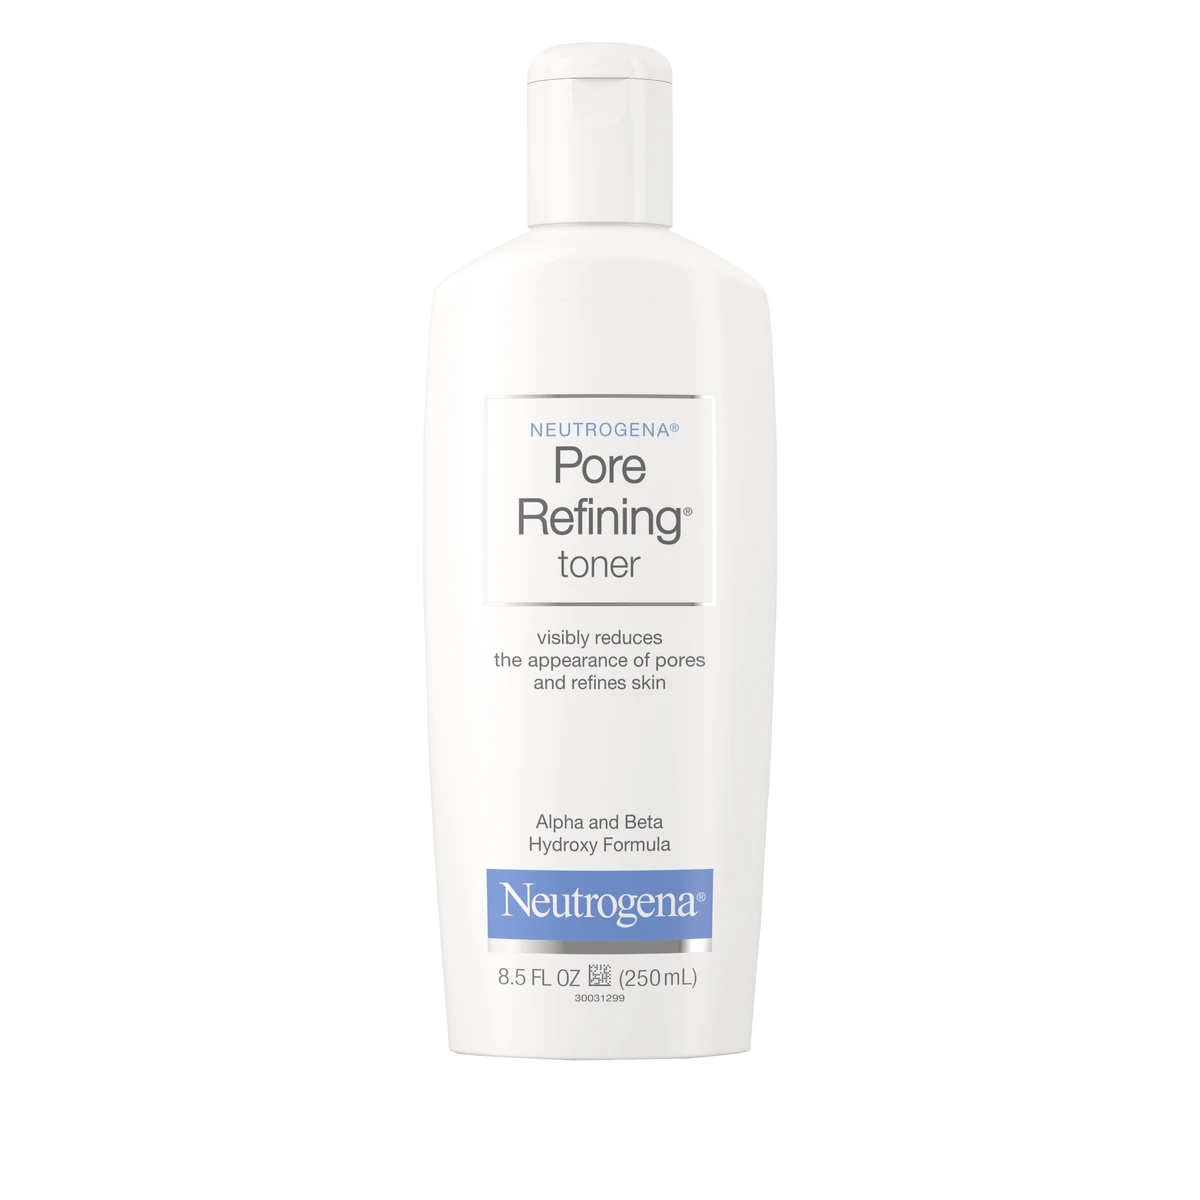 Neutrogena Pore Refining Toner Cleanser  8.5 fl oz